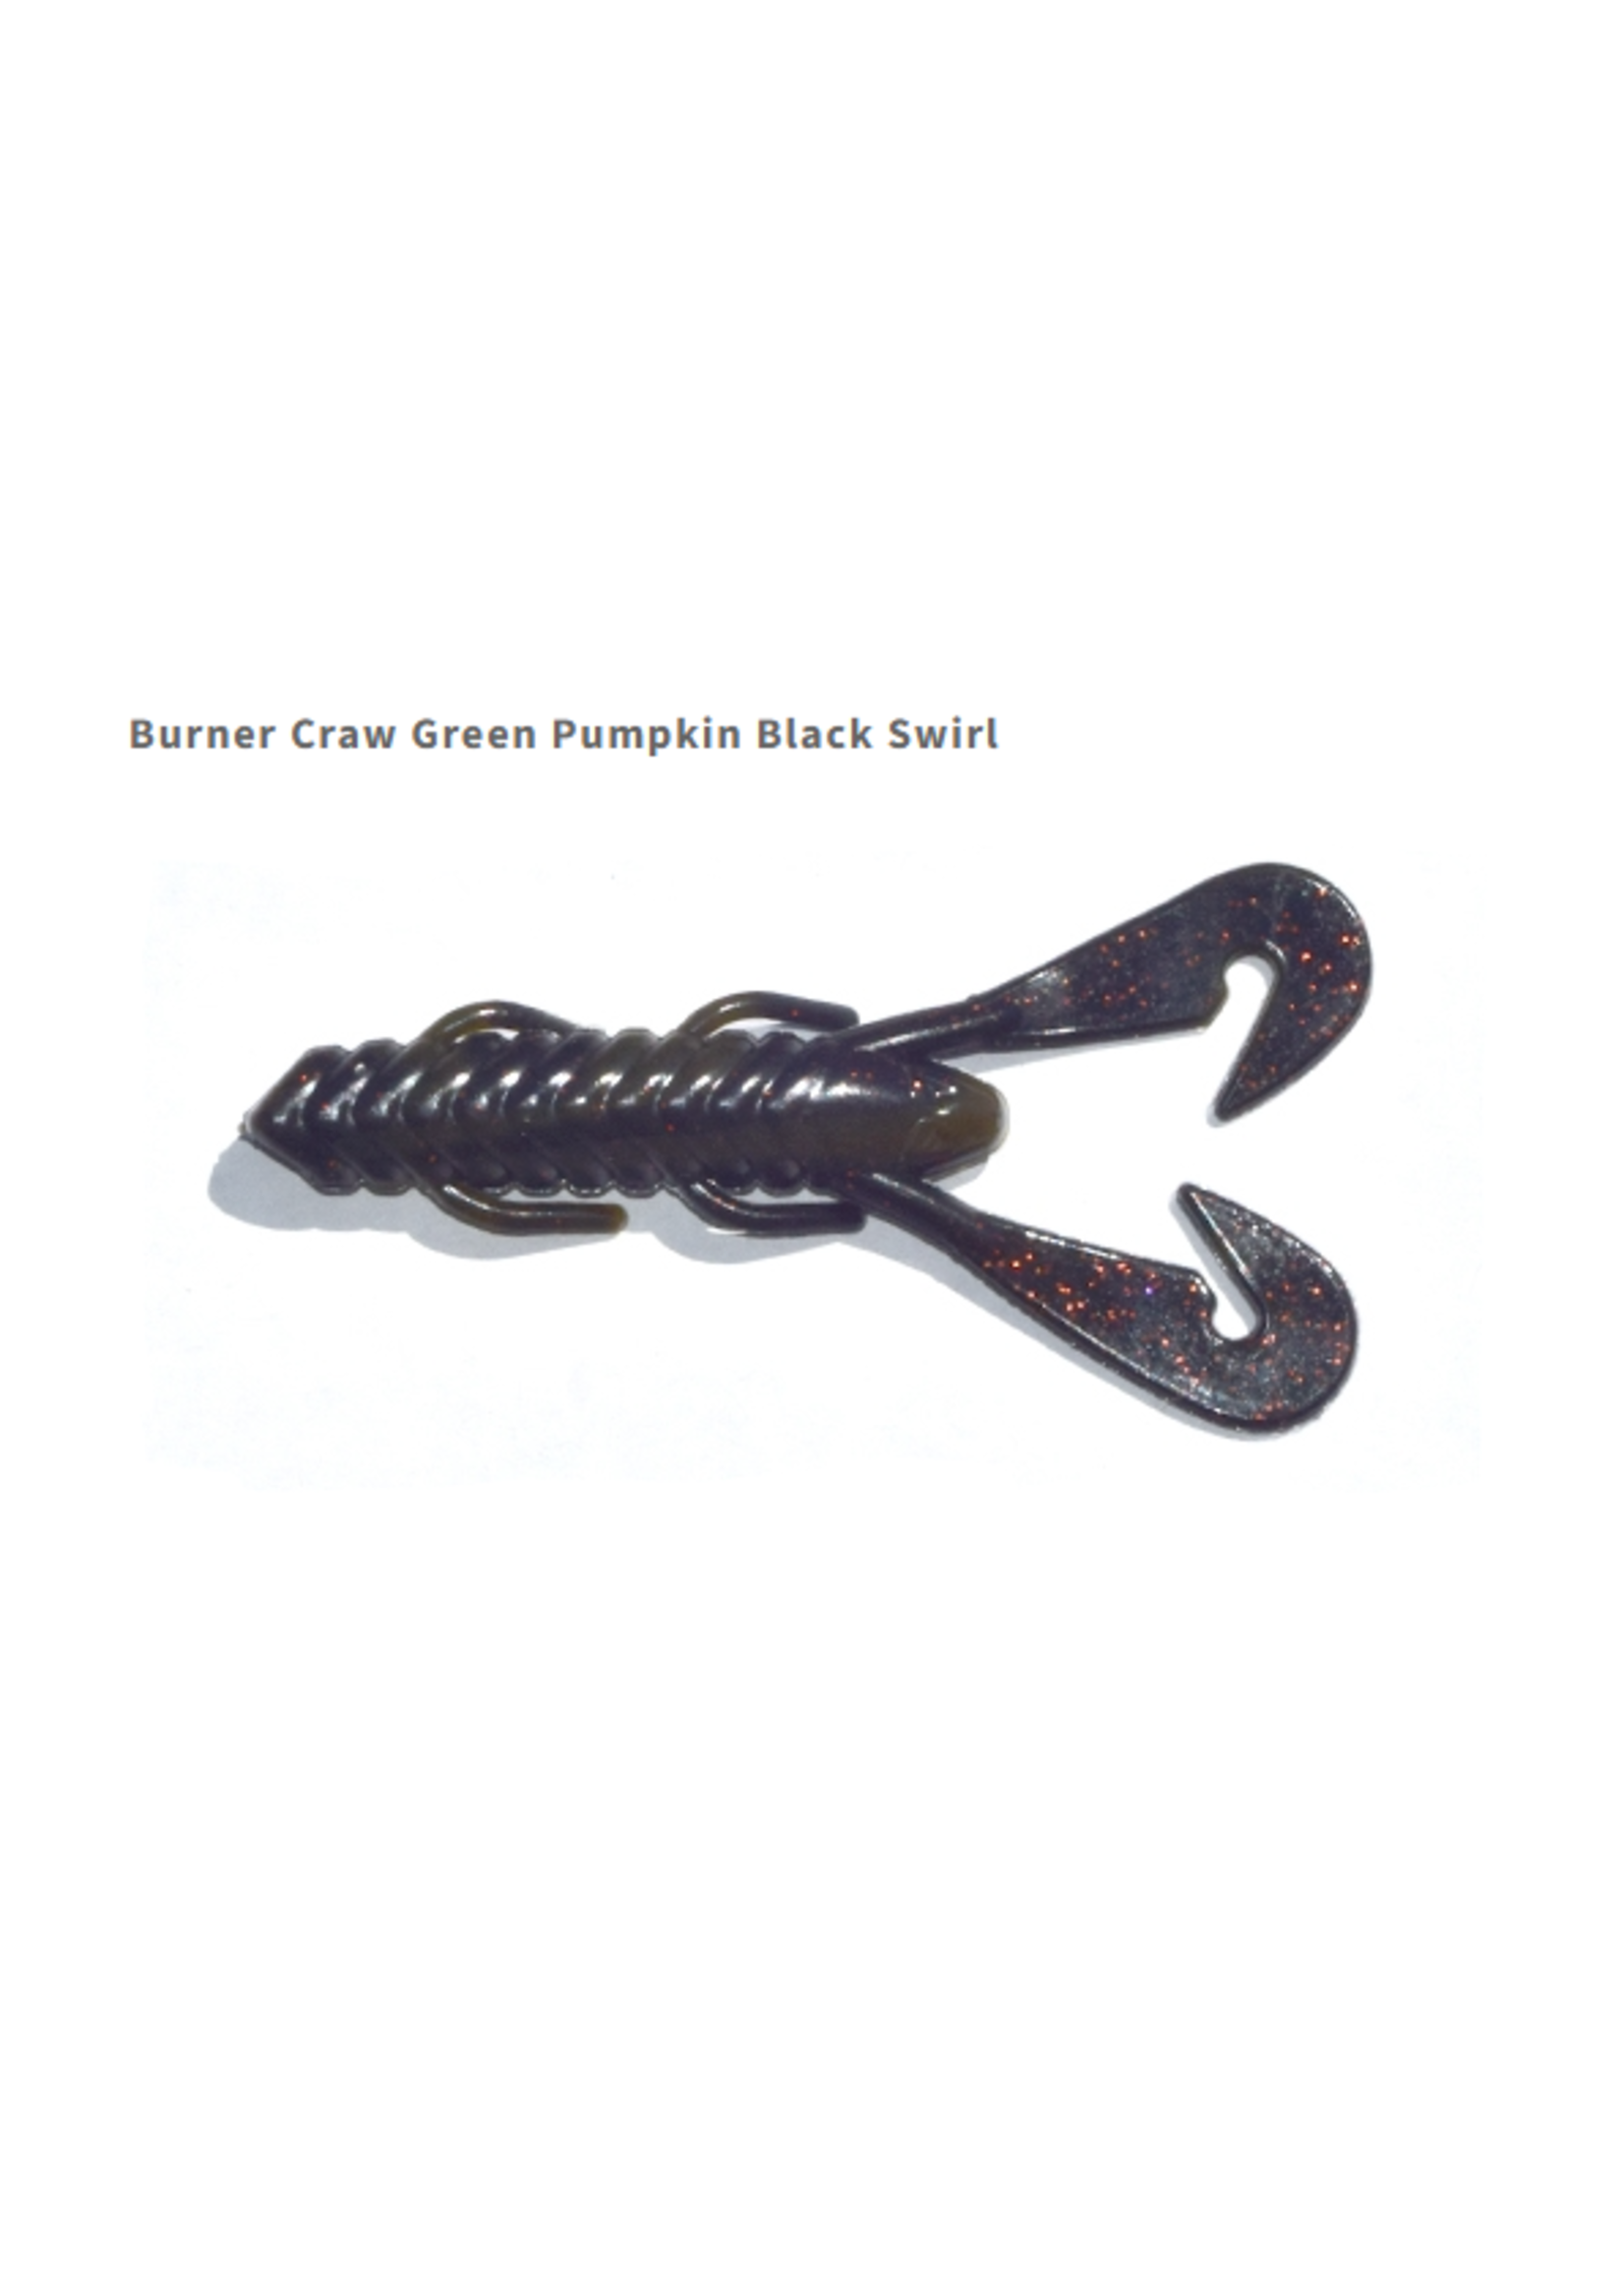 Gambler Burner Craw - Green Pumpkin Black Swirl